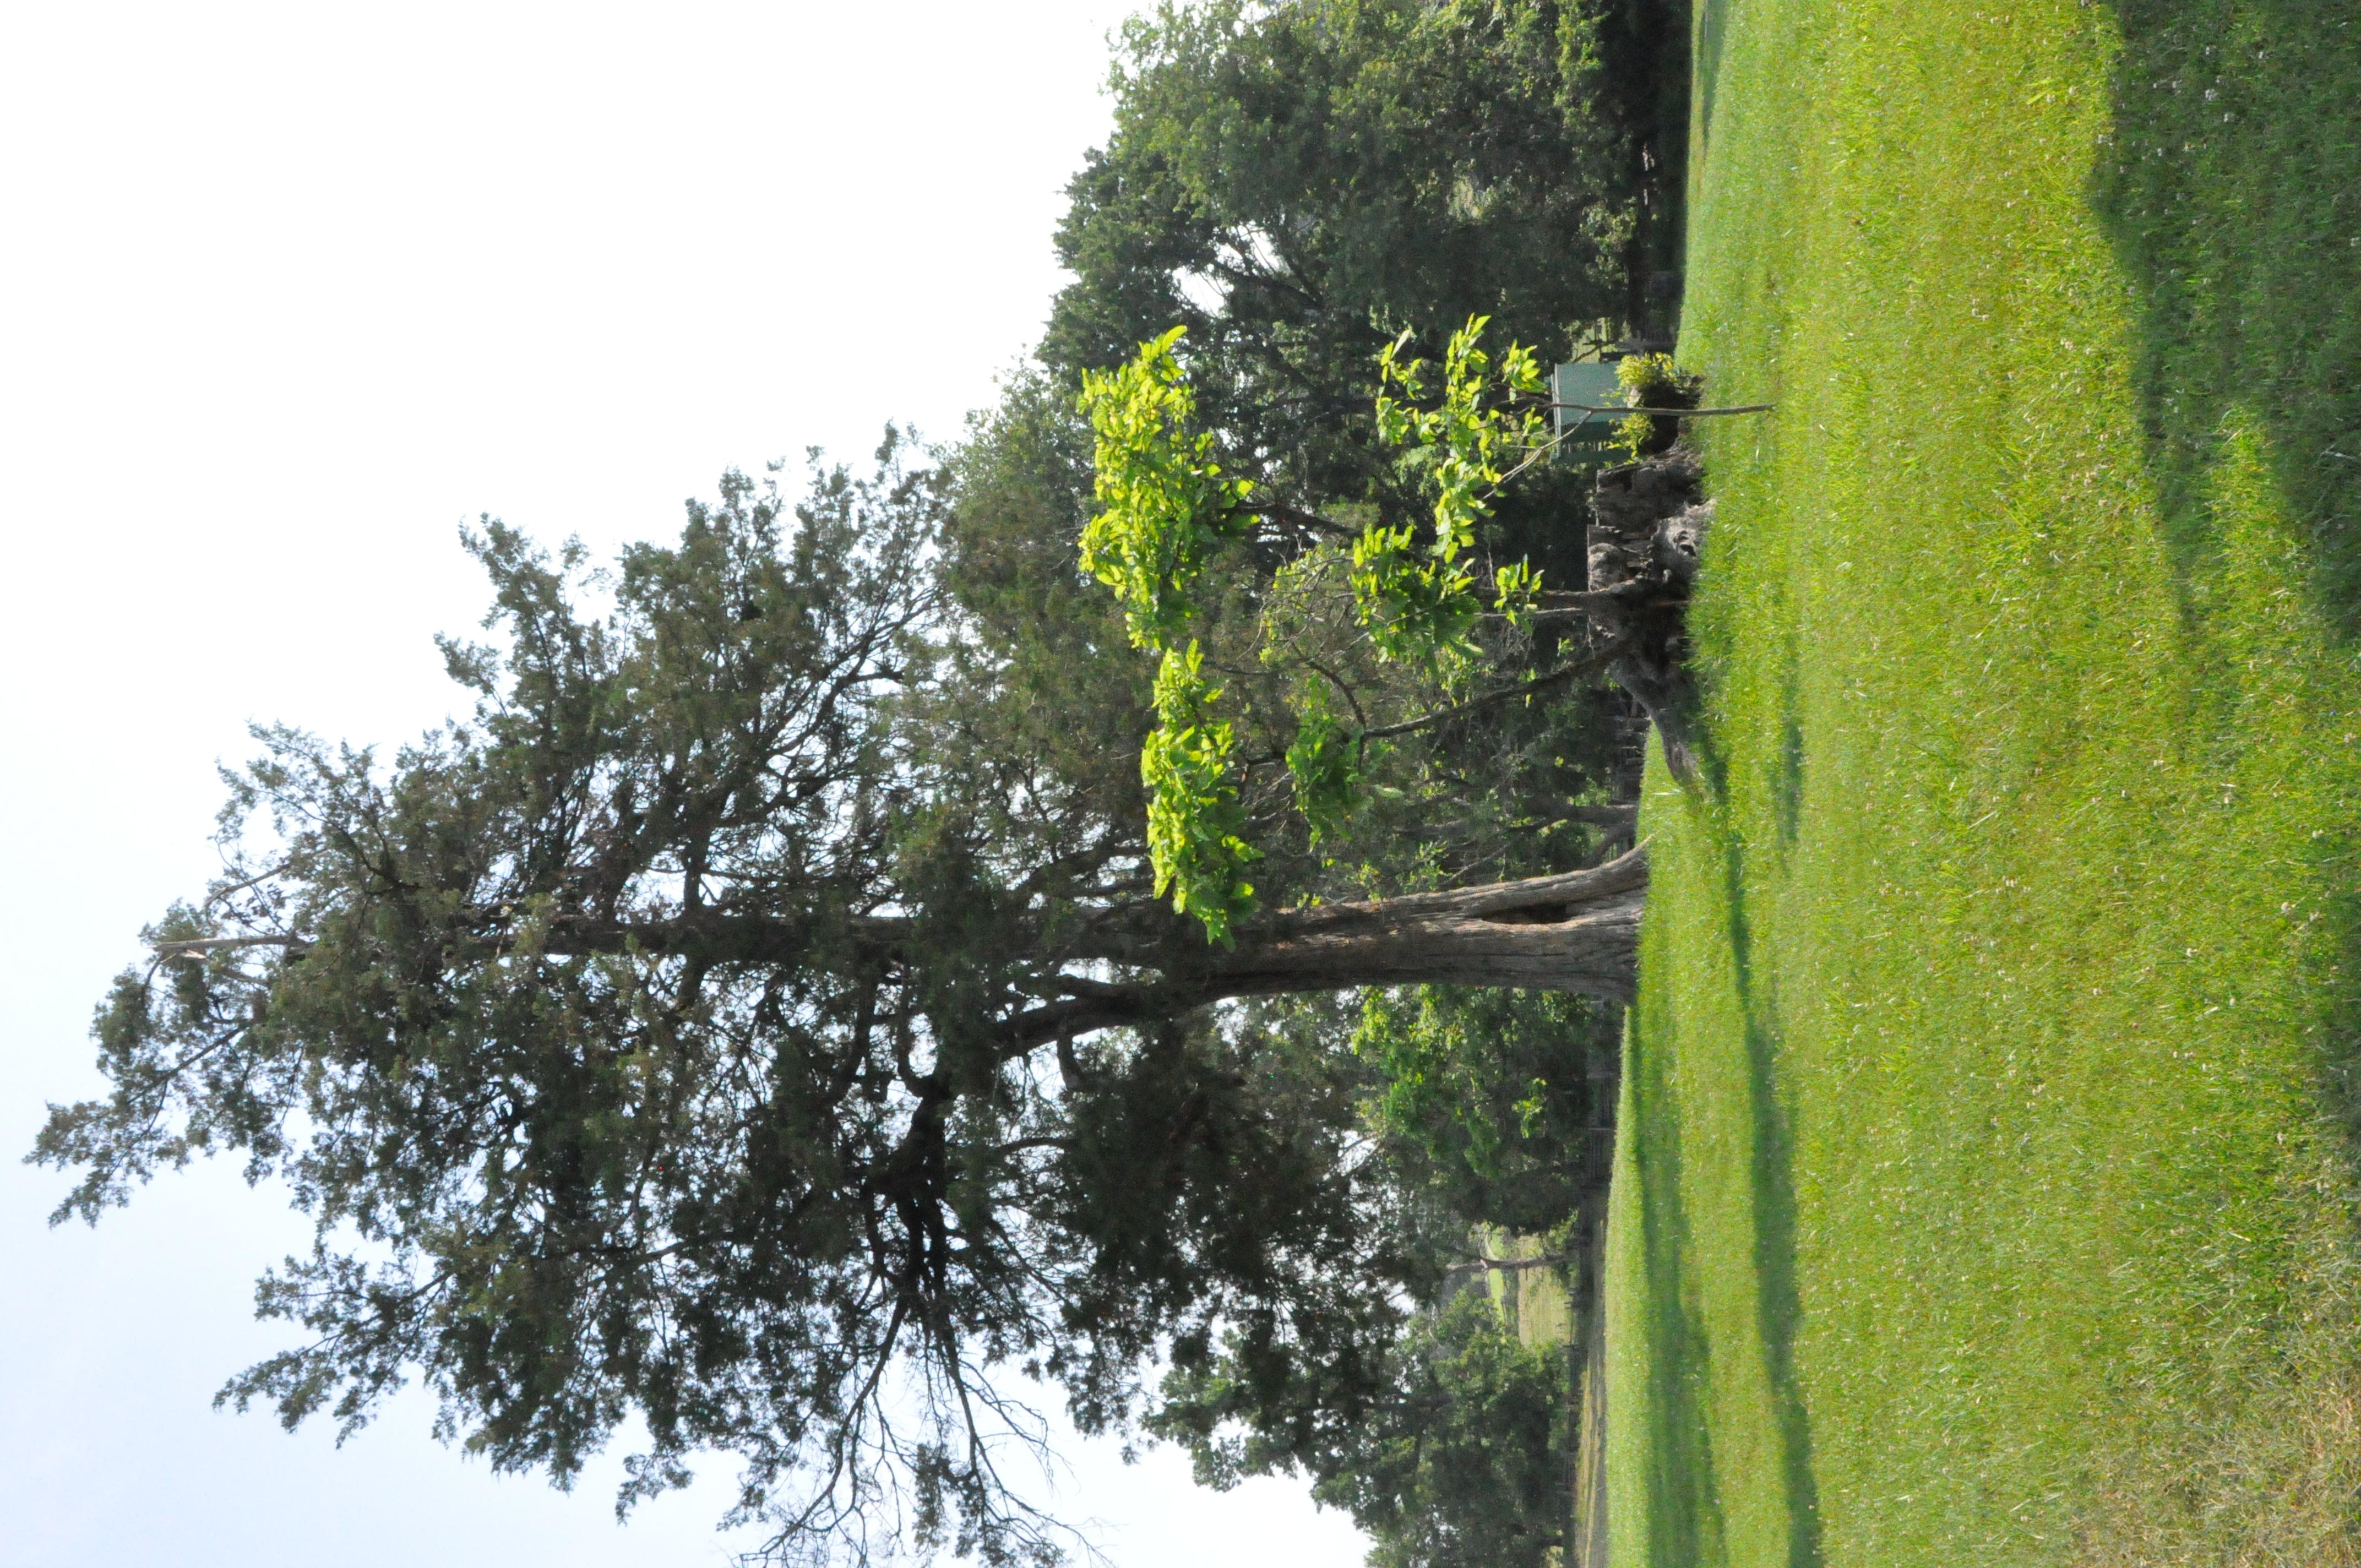 Historic Red Cedar Tree (Juniper) in historic area near Big House outline